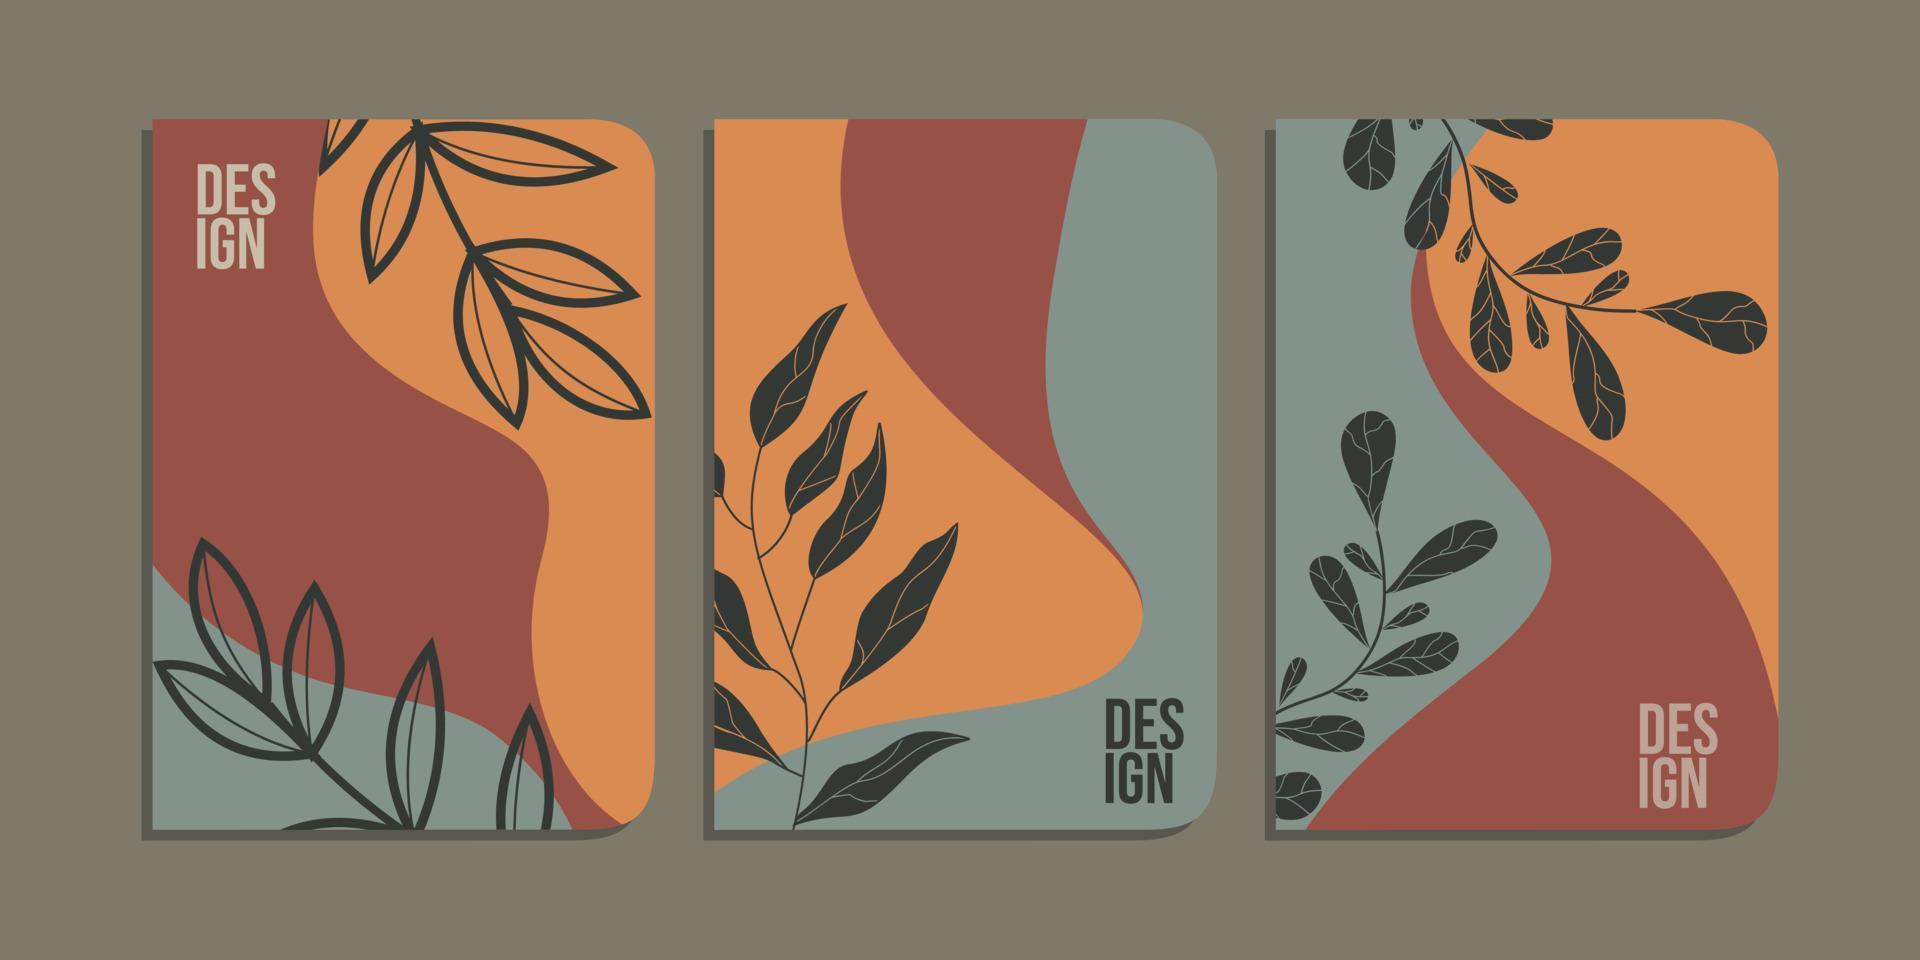 conjunto de diseños de portada de libros con decoraciones florales dibujadas a mano. fondo botánico retro abstracto.tamaño a4 para cuadernos, planificadores, folletos, libros, catálogos vector